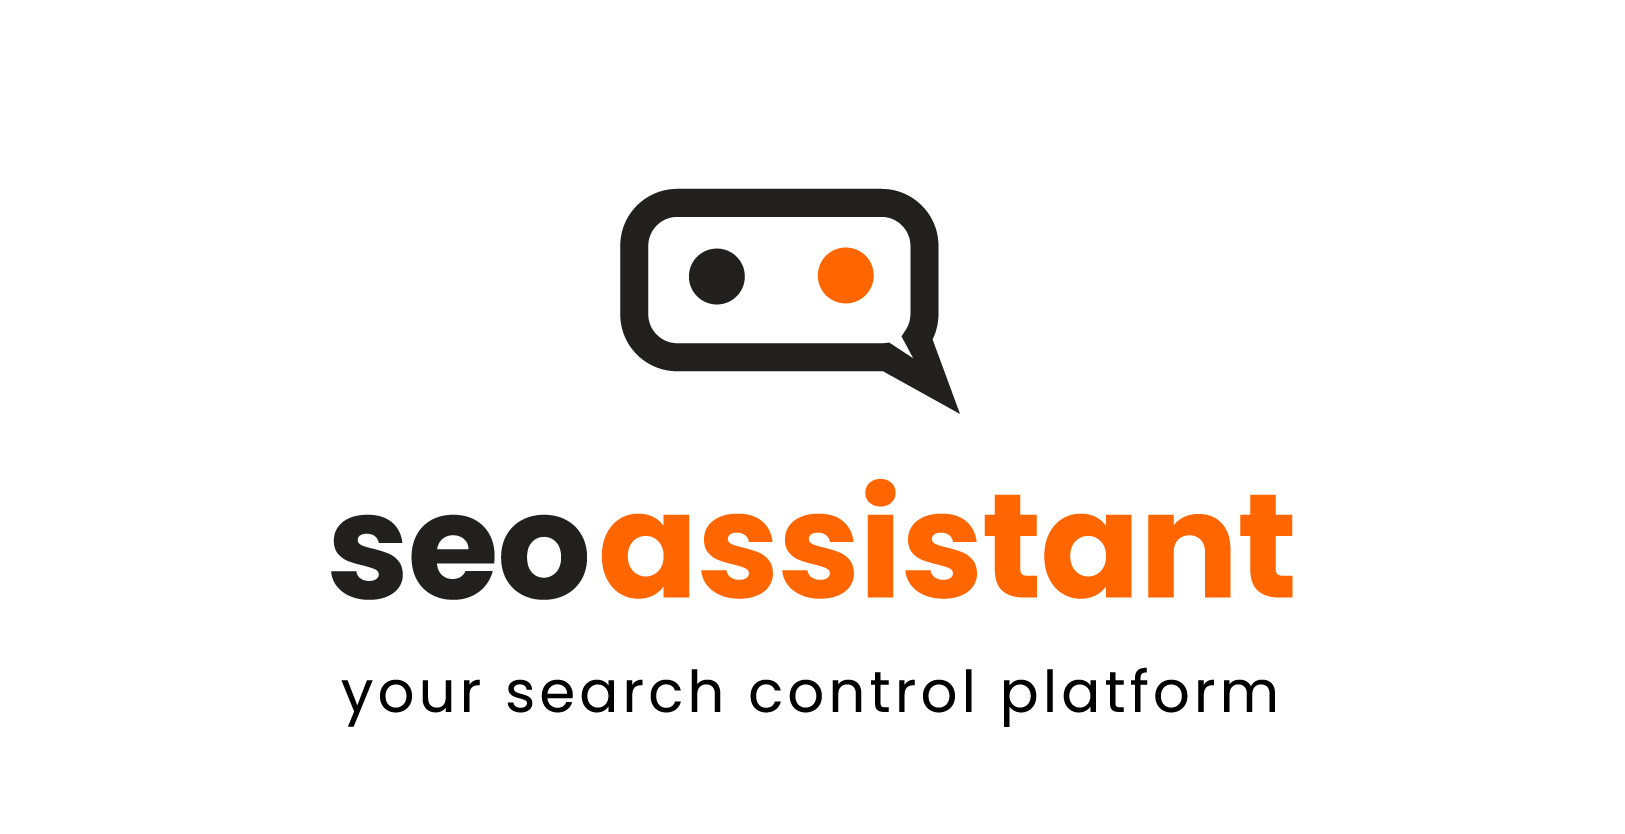 SEO assistant - Your search control platform